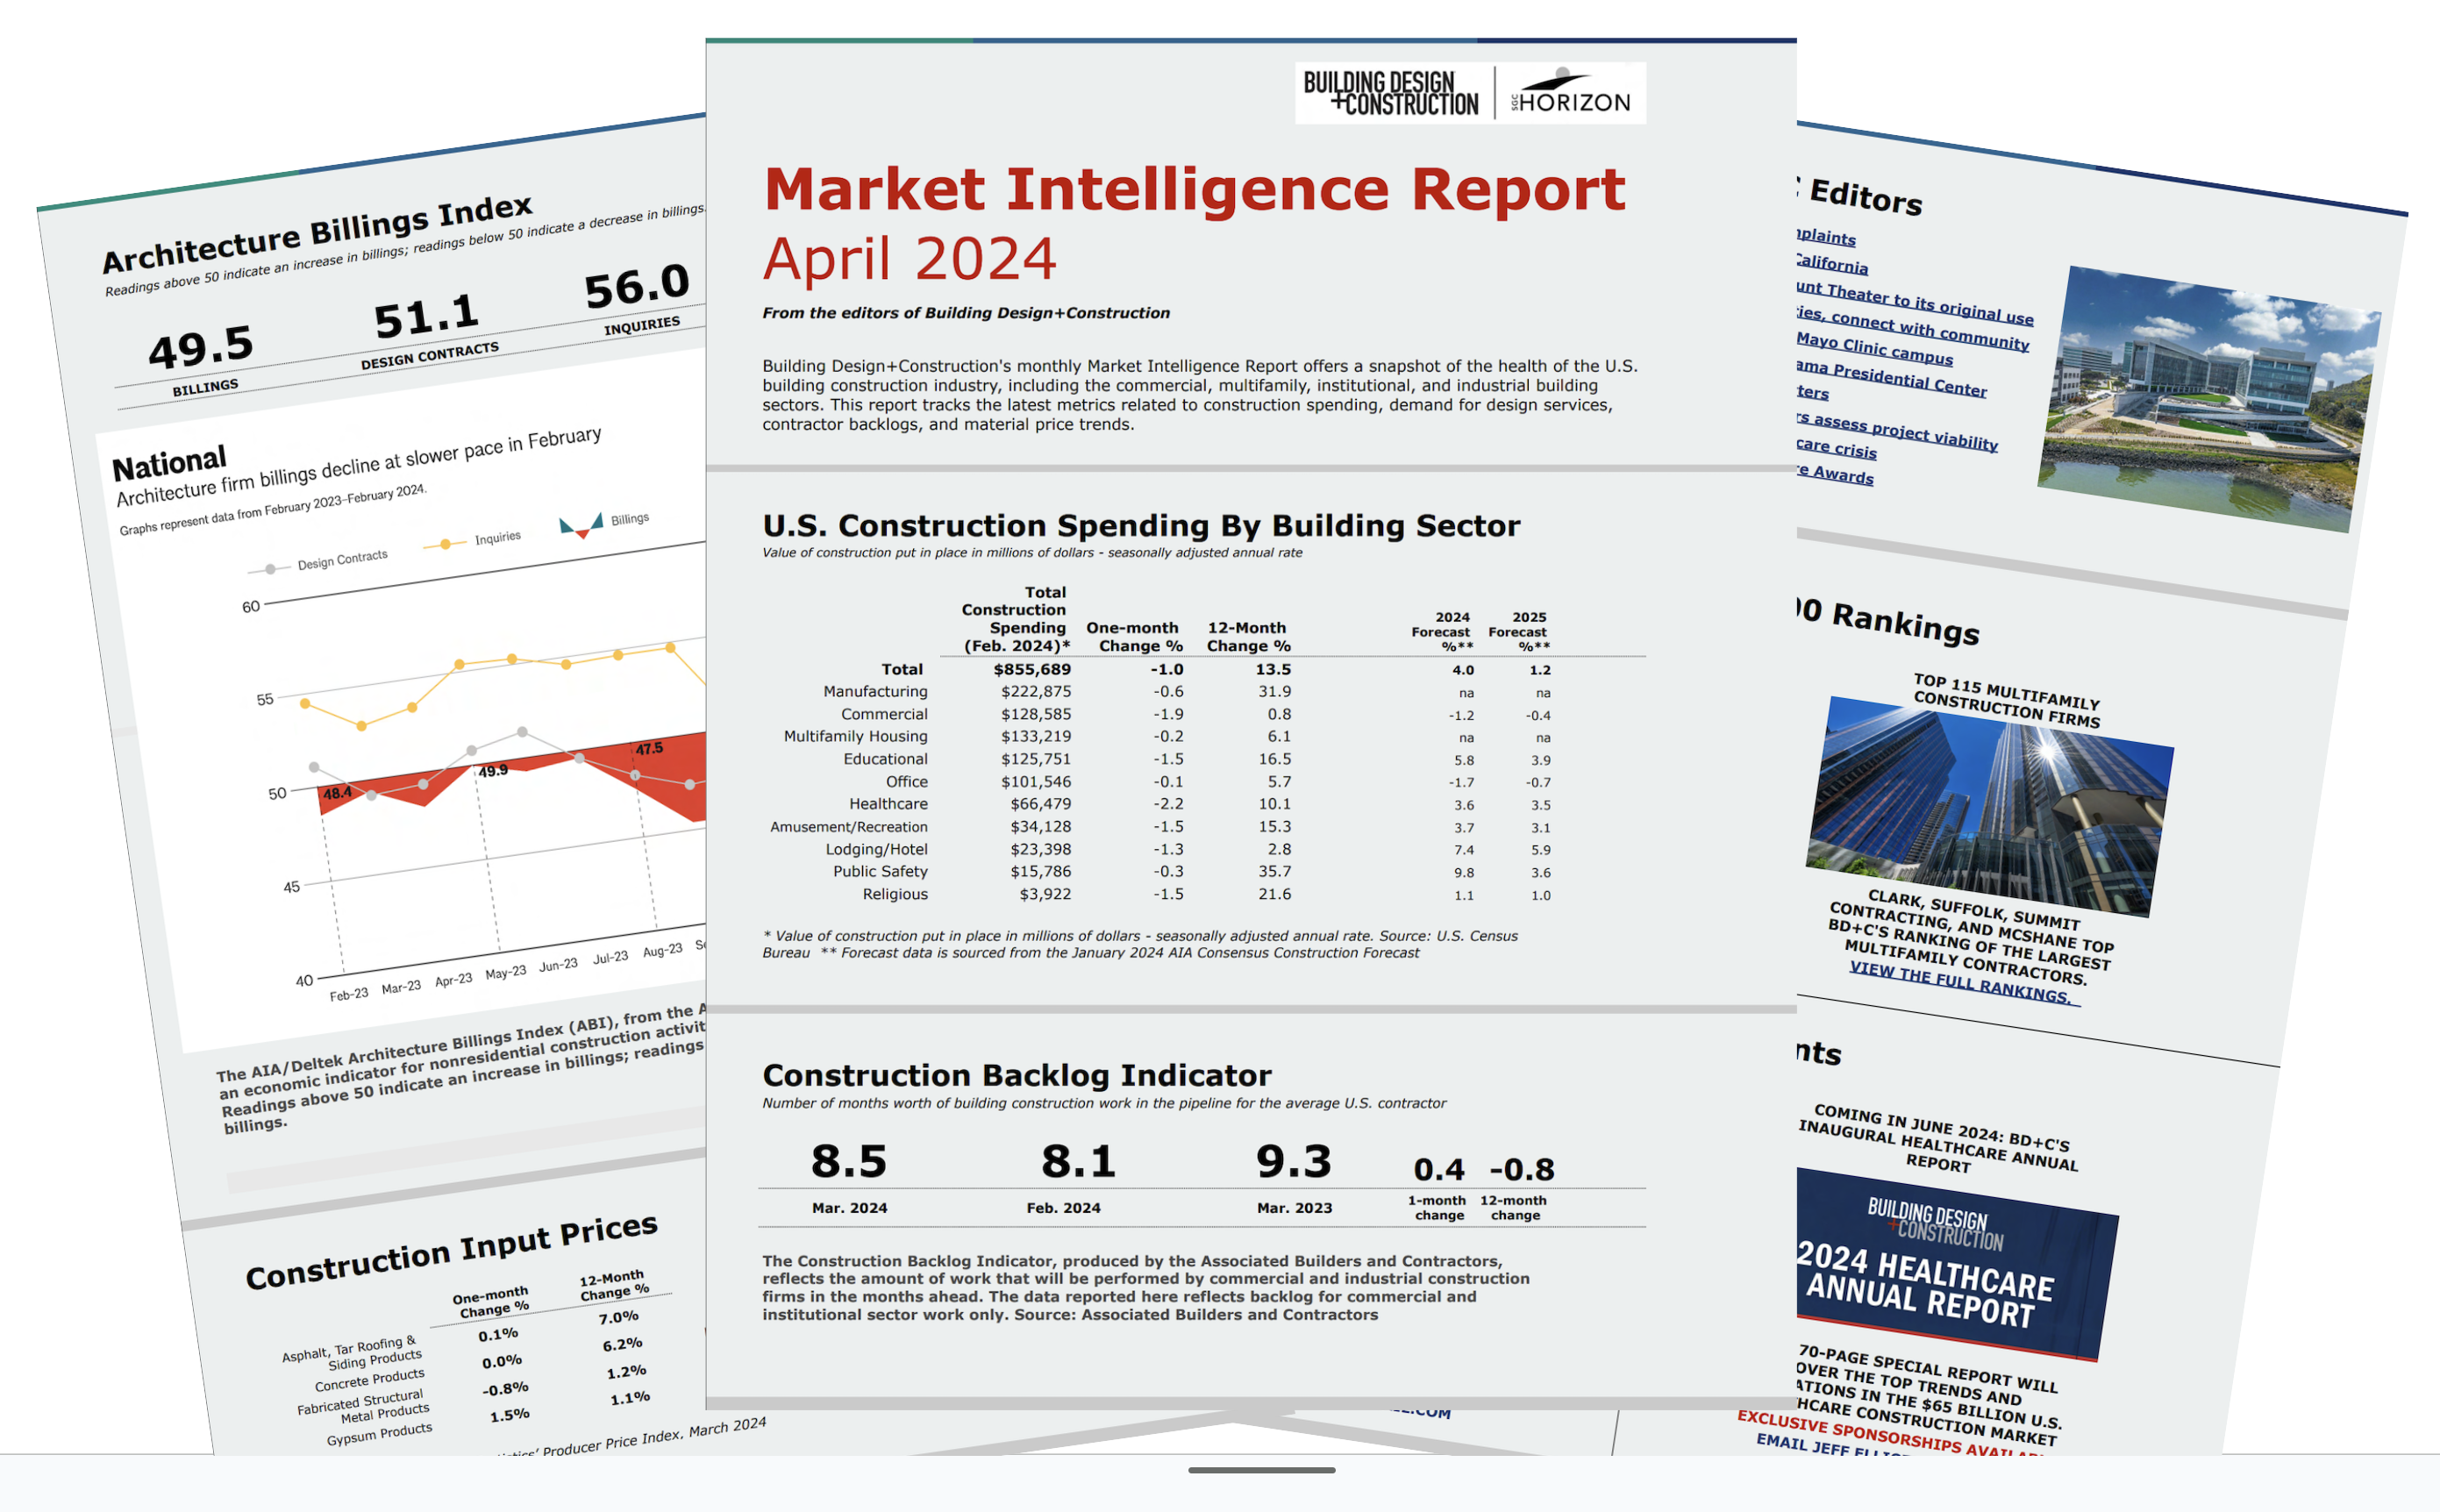 New download: BD+C's April 2024 Market Intelligence Report